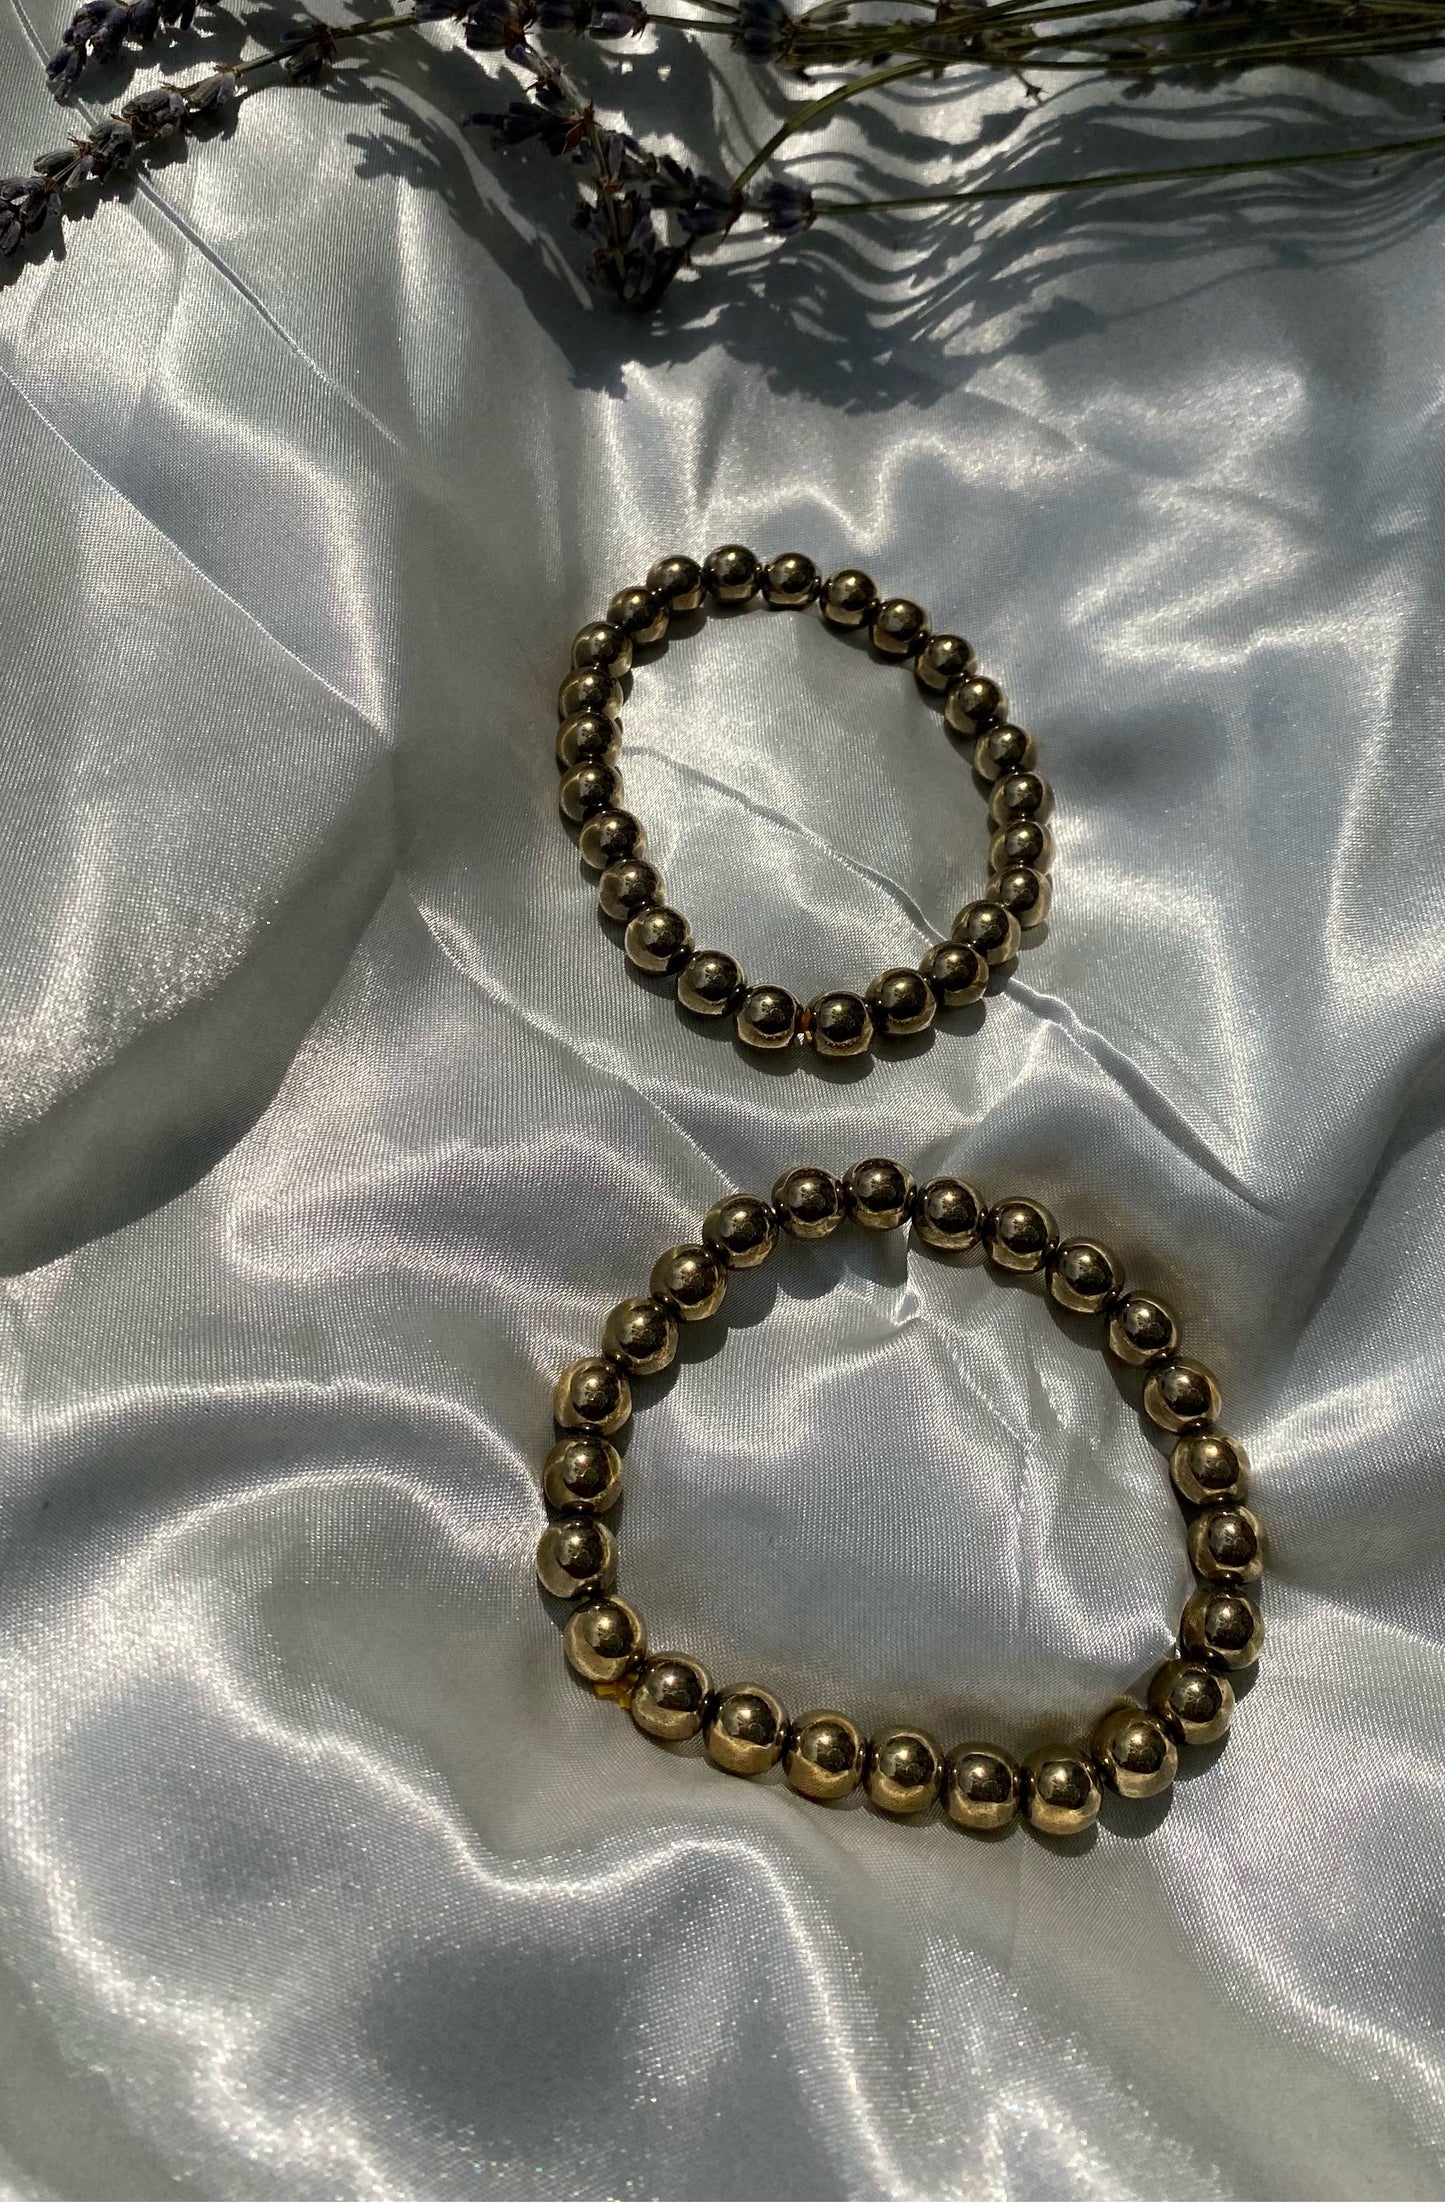 Pyrite (Fool’s Gold) bracelet